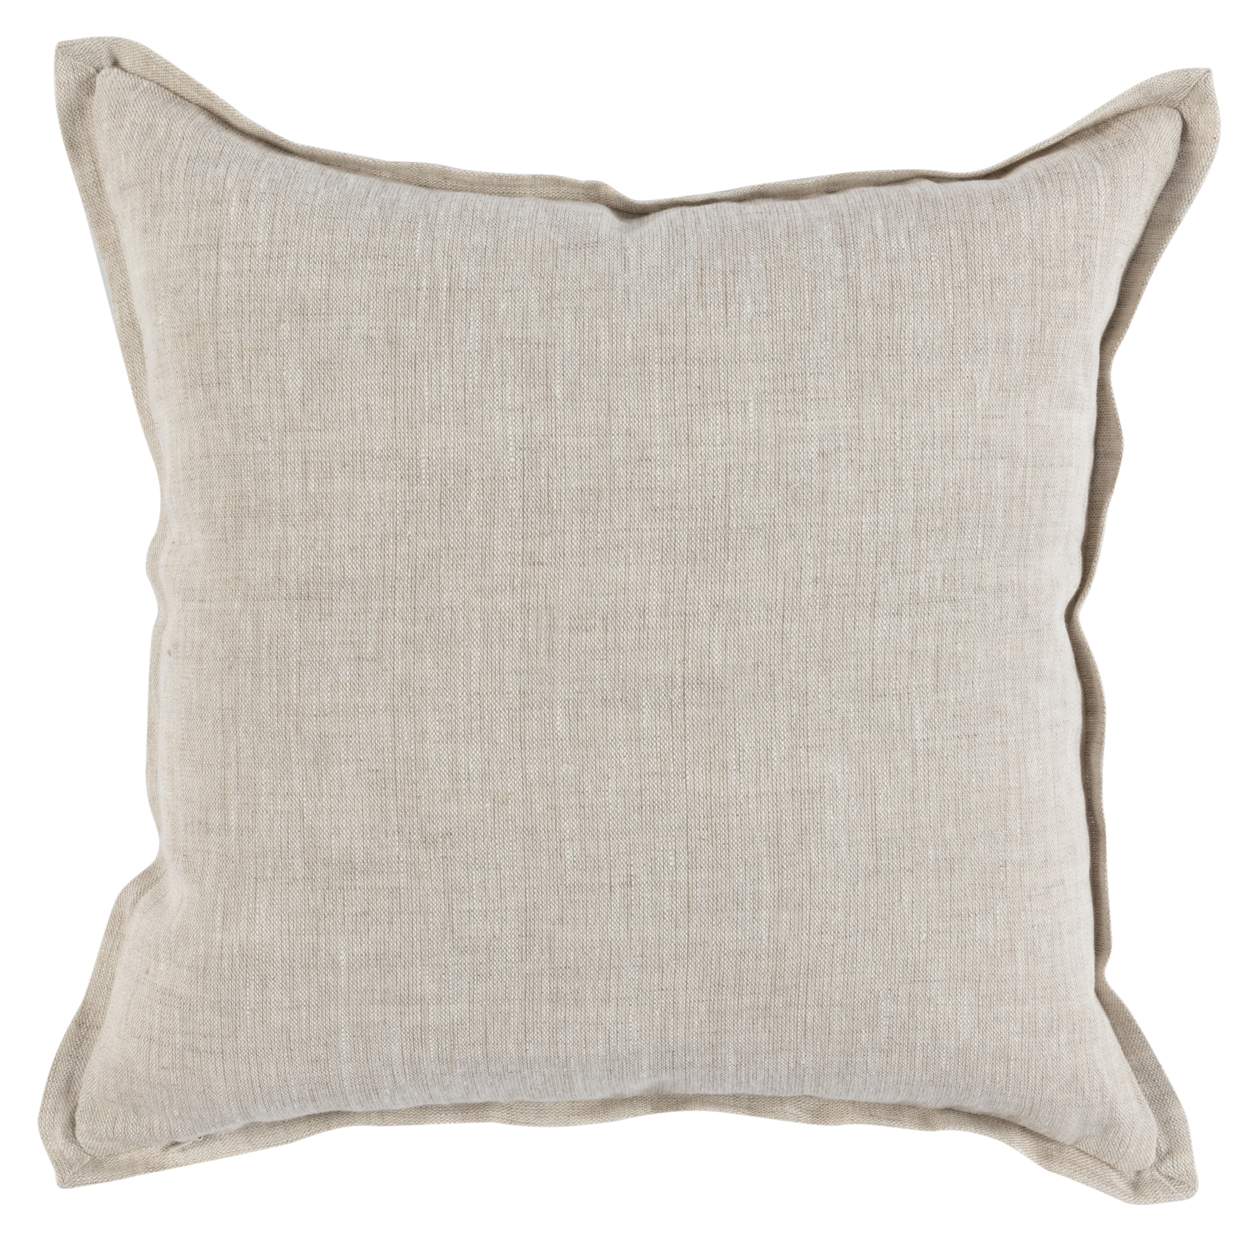 Throw Pillow With Hand Applique Design And Knife Edge Finish, Gray- Saltoro Sherpi